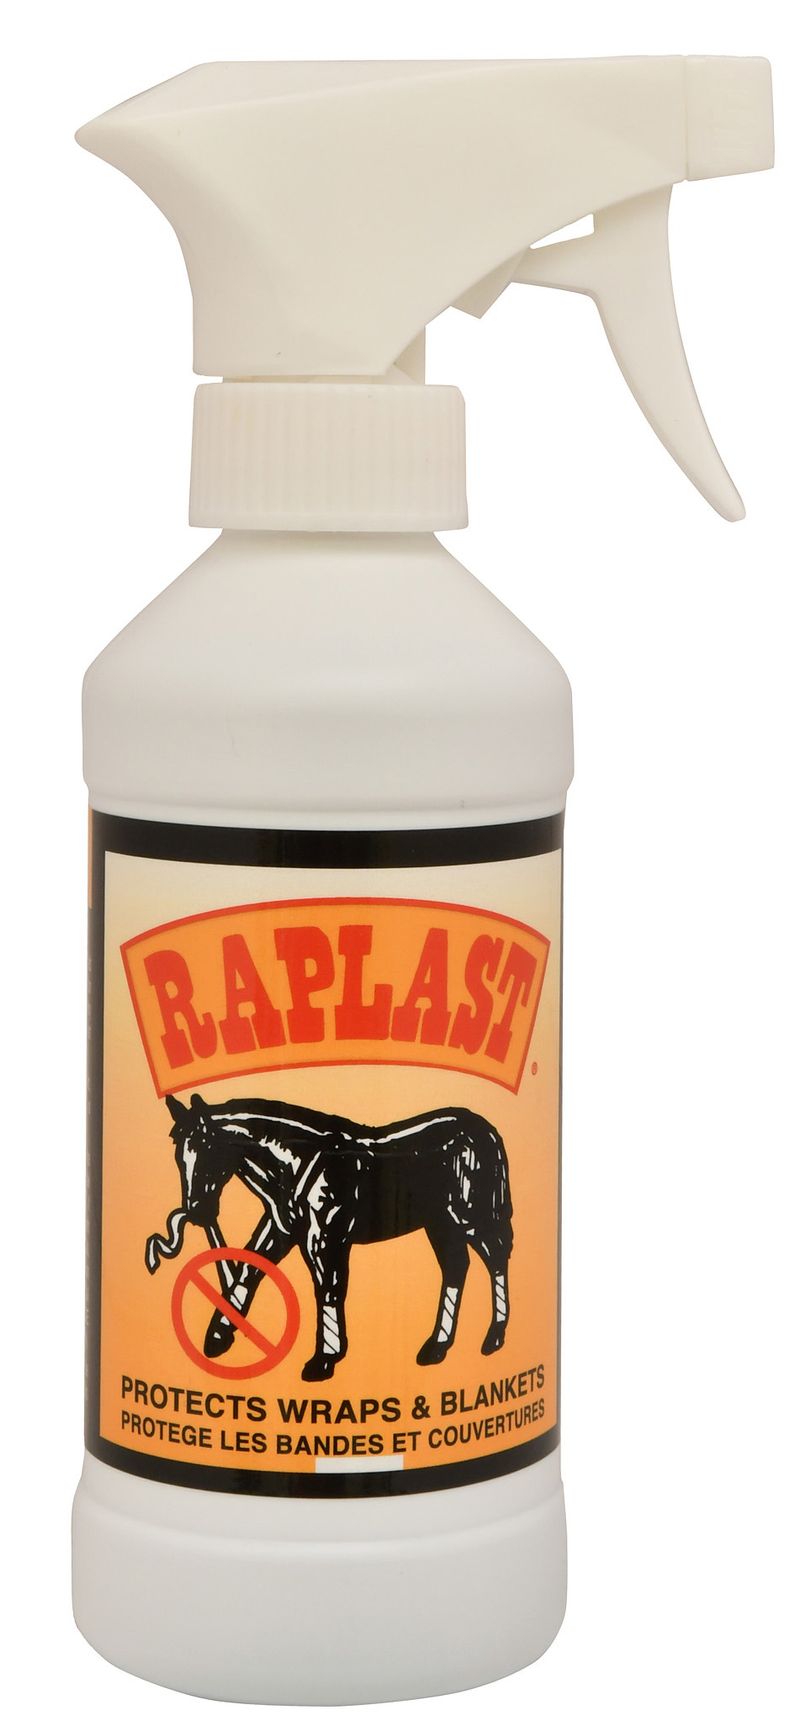 RapLast-8-oz-spray